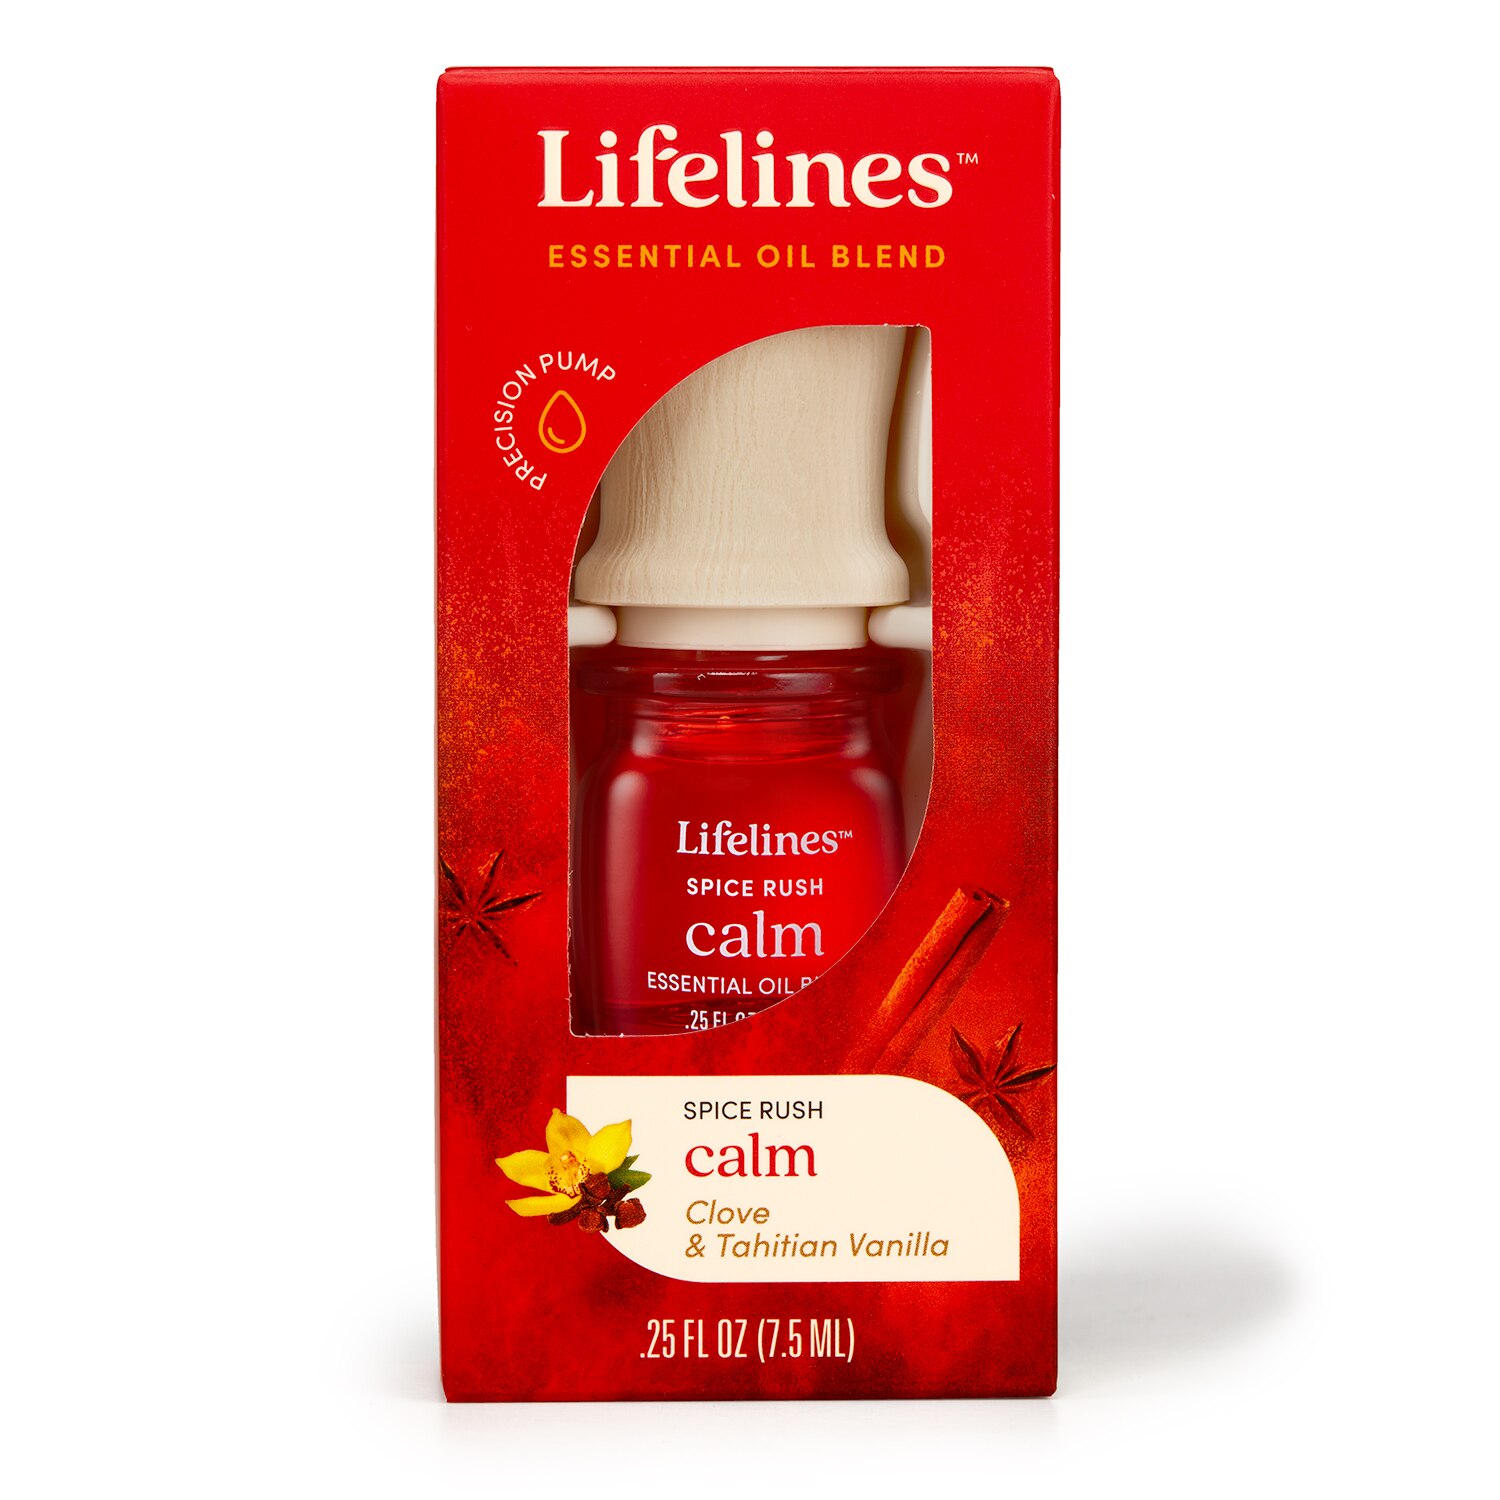 Lifelines Essential Oil Blend - Spice Rush: Calm